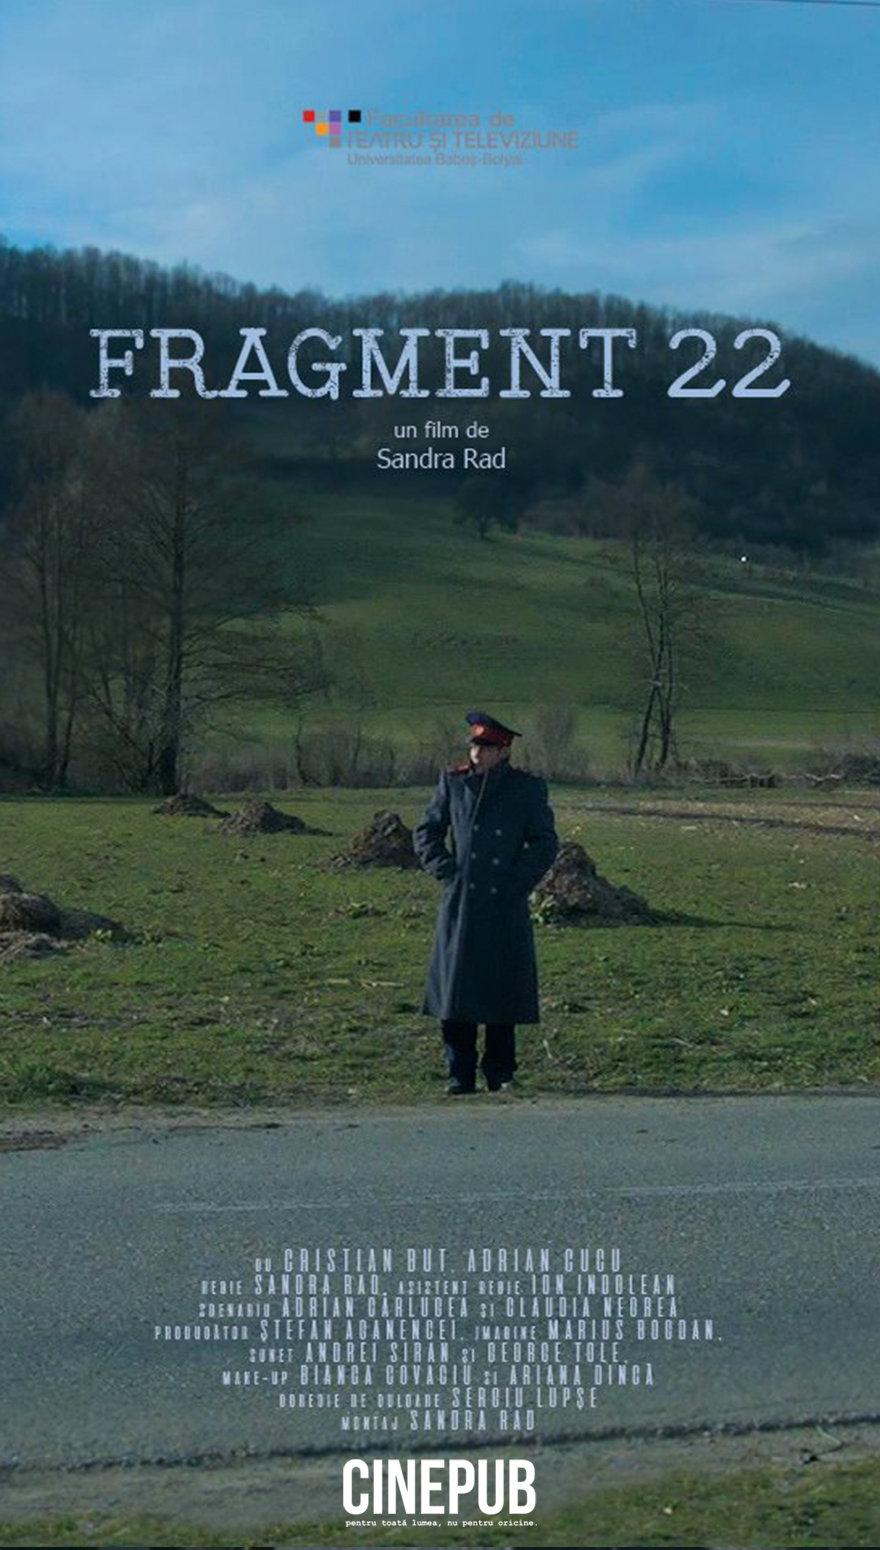 Fragment 22 - by Sandra Rad - online short film UBB on CINEPUB